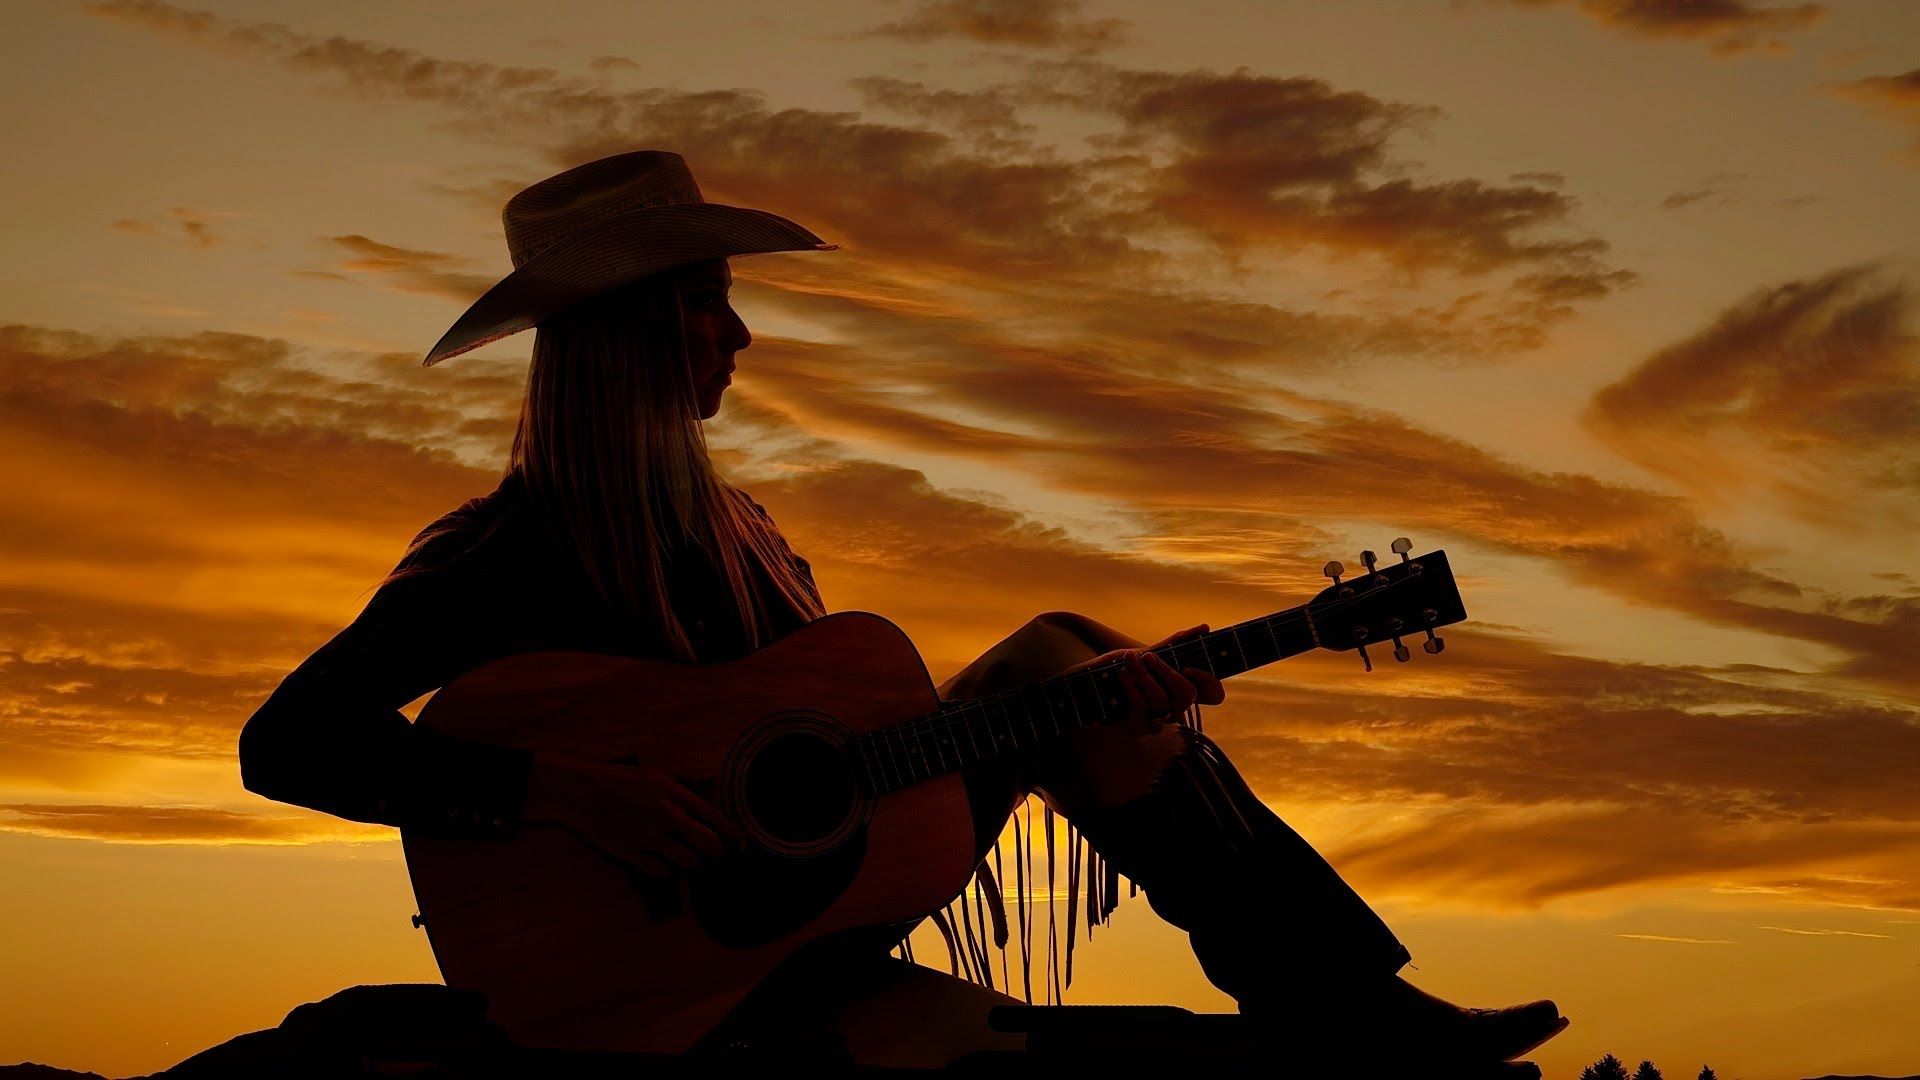 cowboy tapete hd,himmel,fotografie,kopfbedeckung,silhouette,musikinstrument